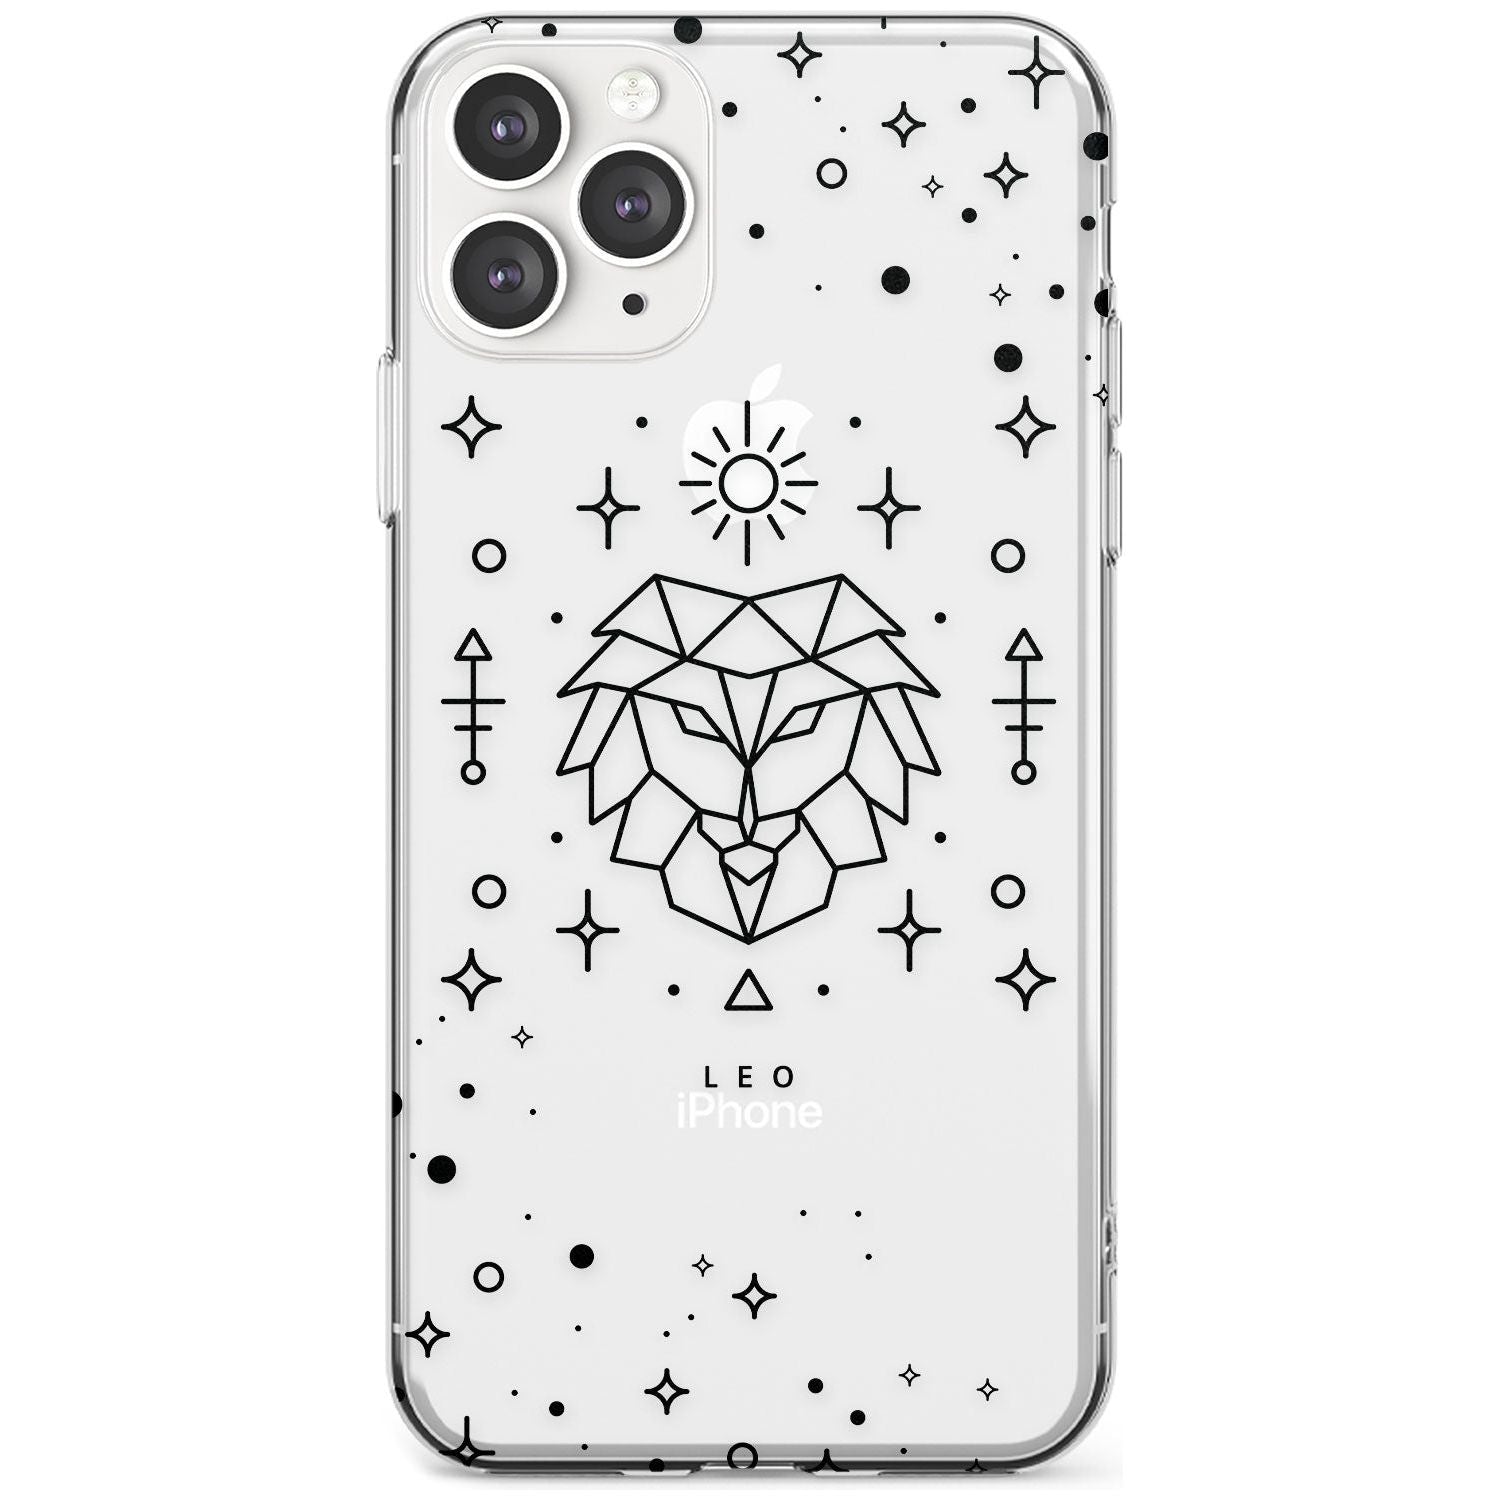 Leo Emblem - Transparent Design Slim TPU Phone Case for iPhone 11 Pro Max